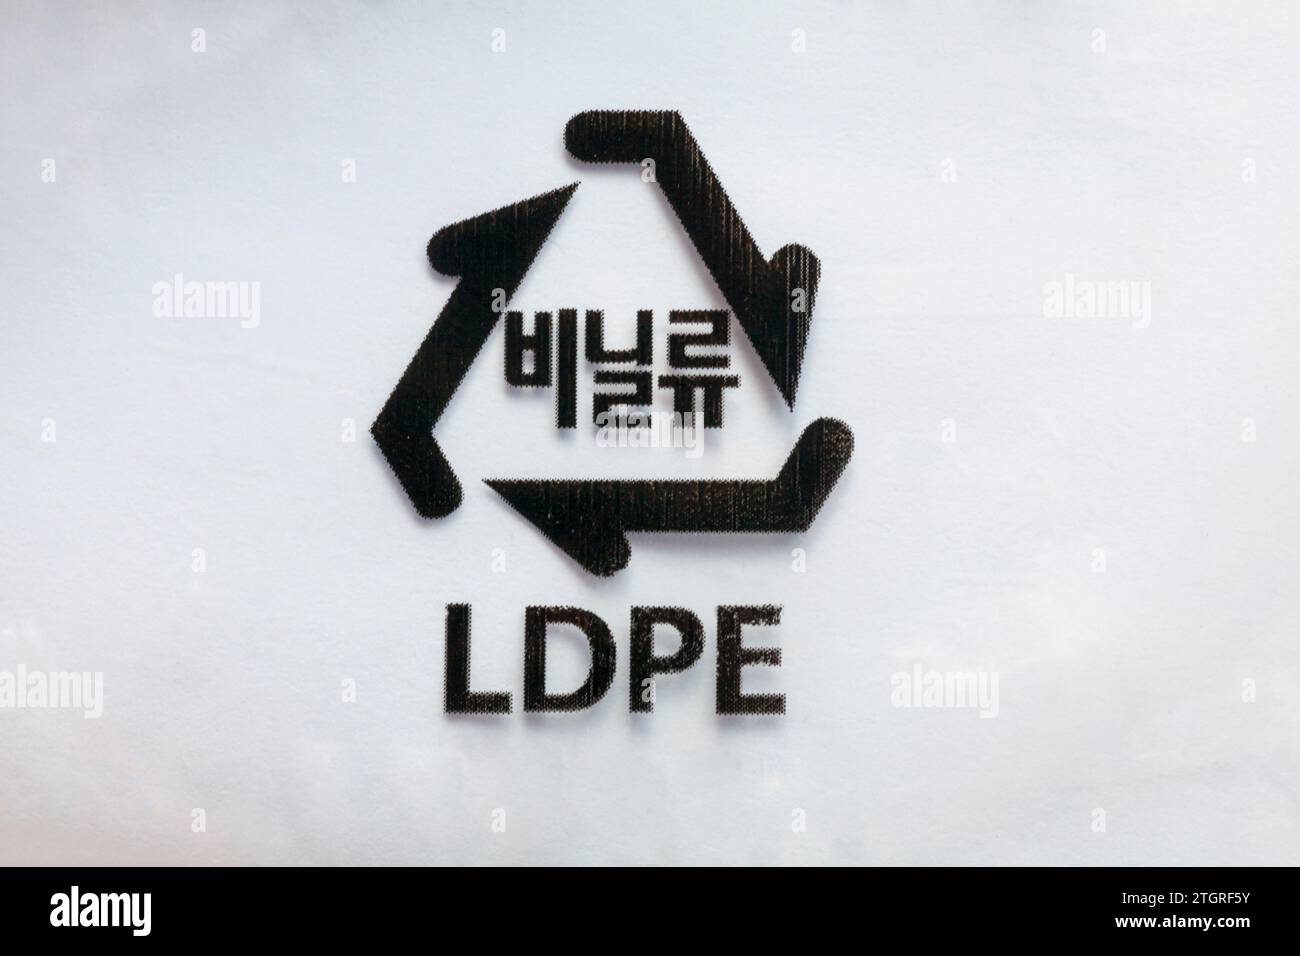 LDPE-Recycling-Logo aus Polyethylen niedriger Dichte auf Plastikbeutelverpackung – Recycling-Symbole auf Plastikbeuteln Stockfoto